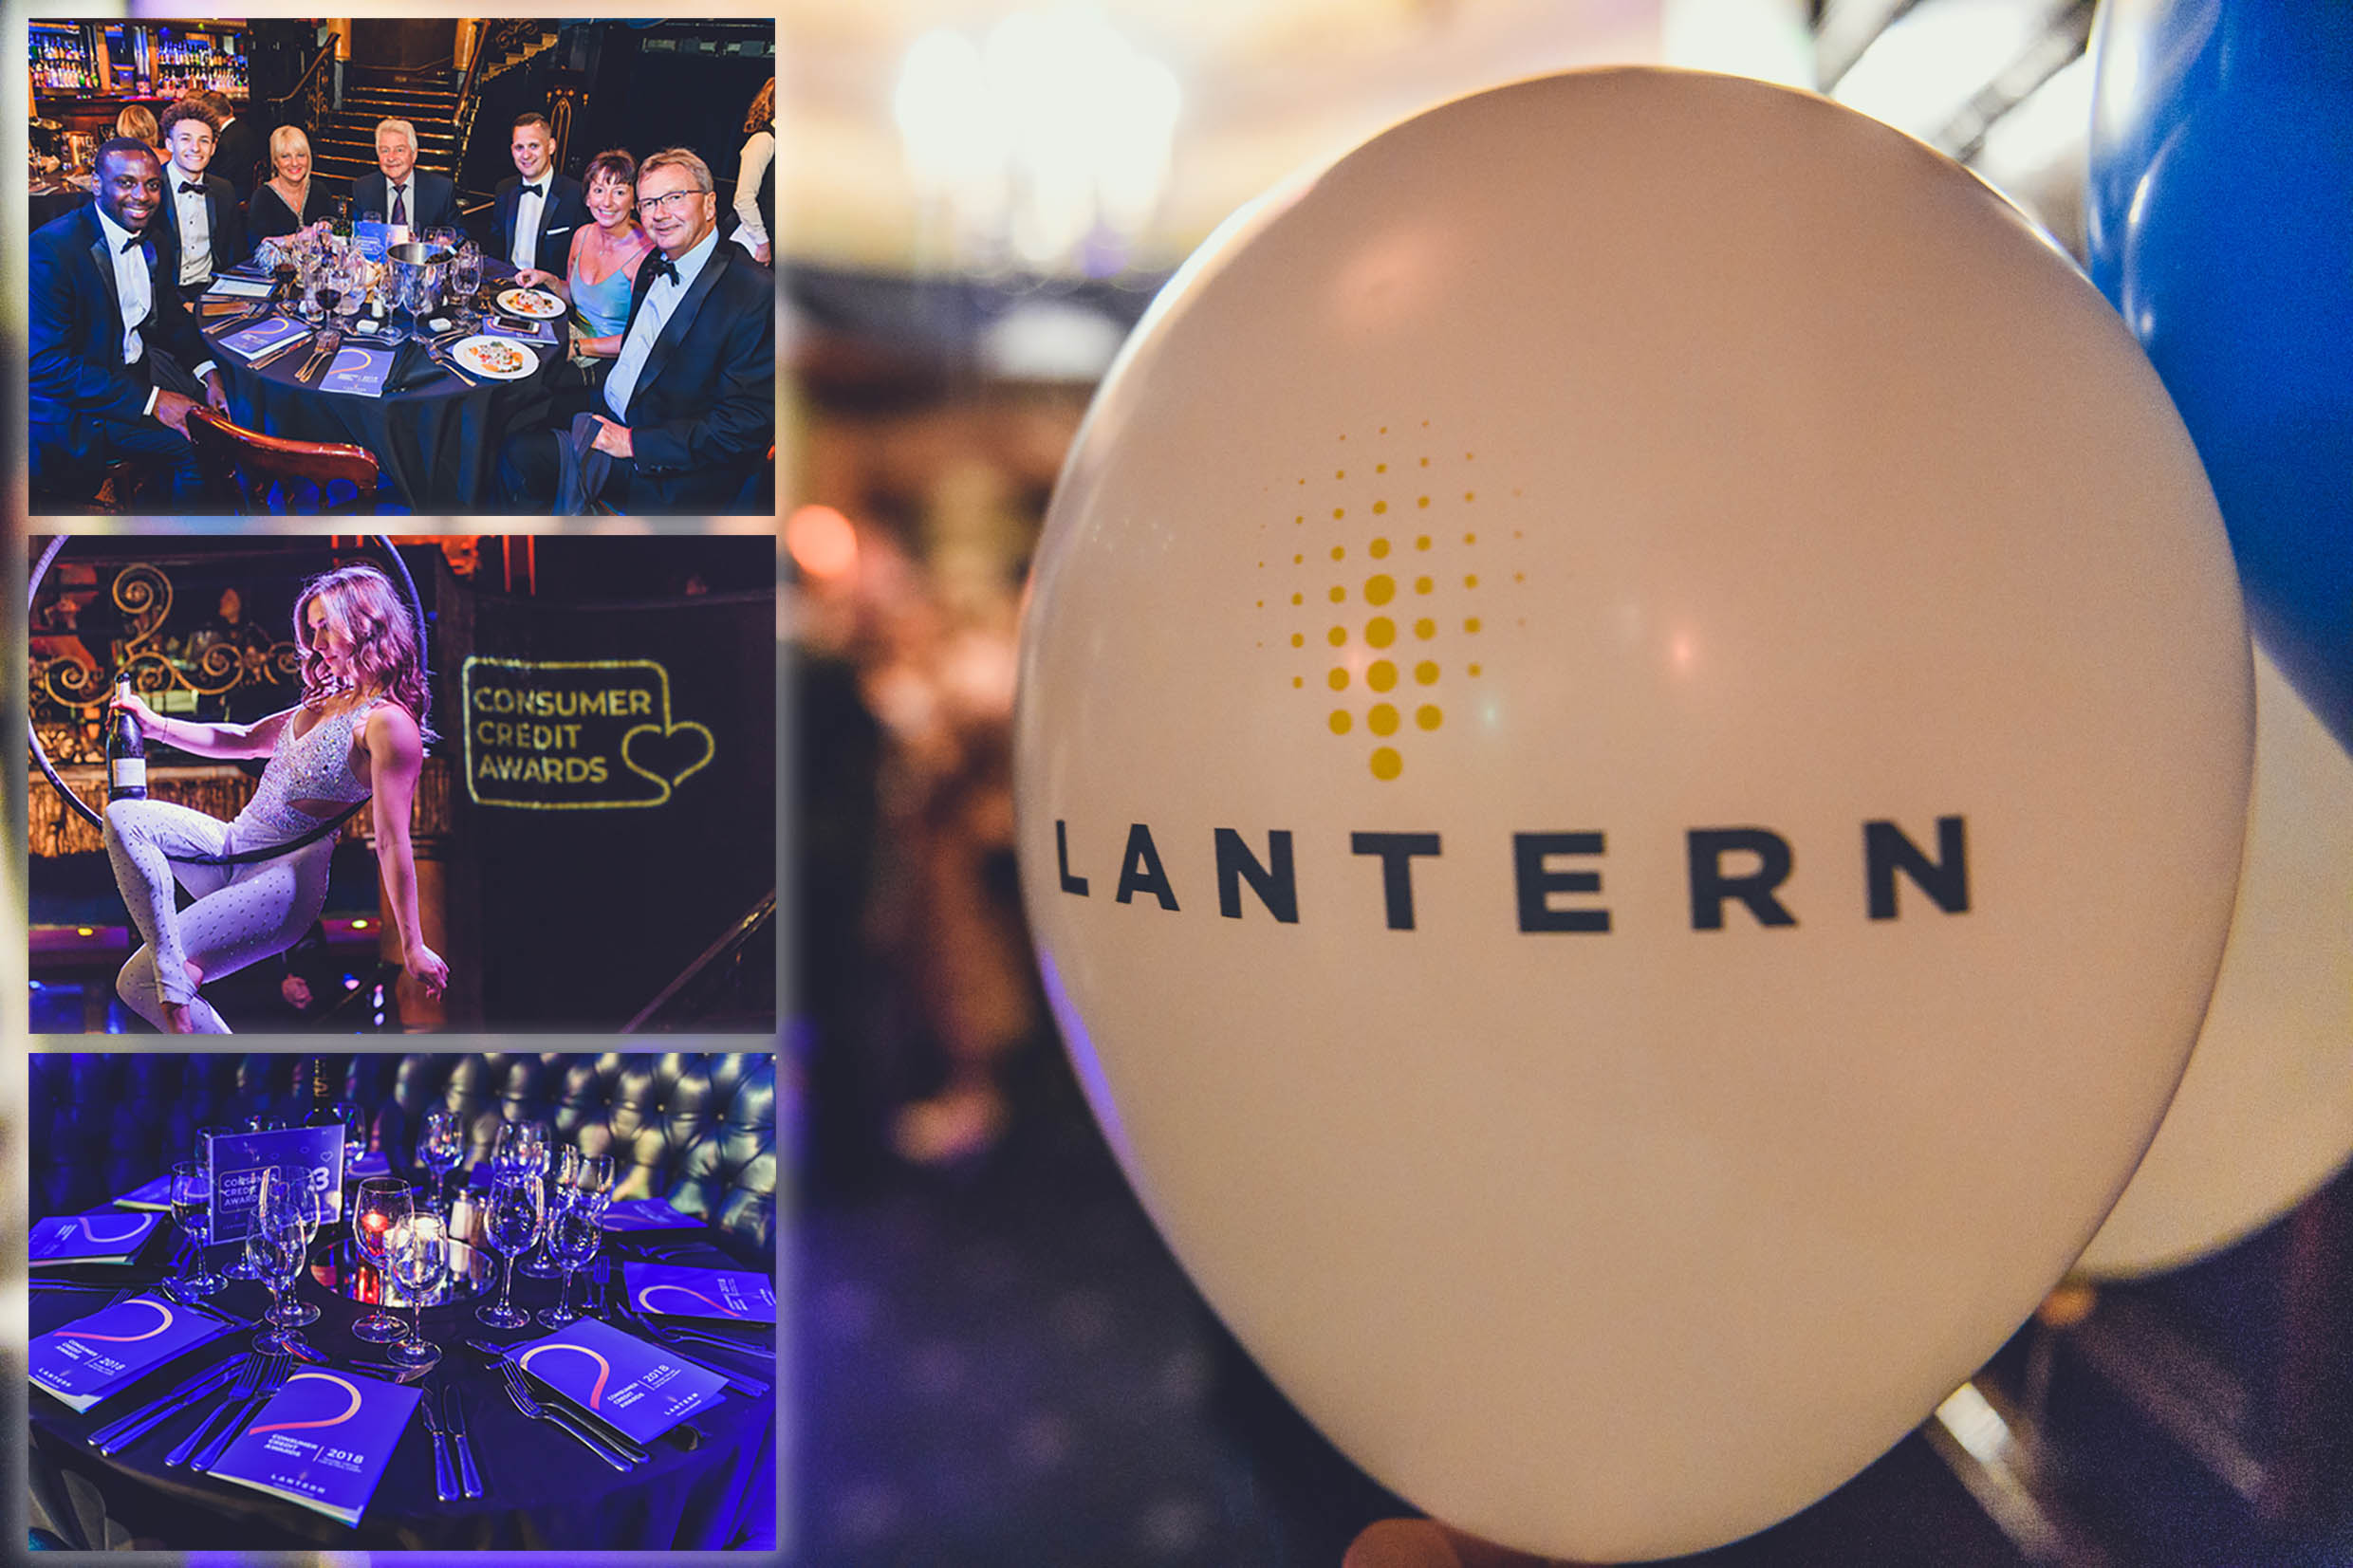 Lantern - Consumer Credit Awards 2018